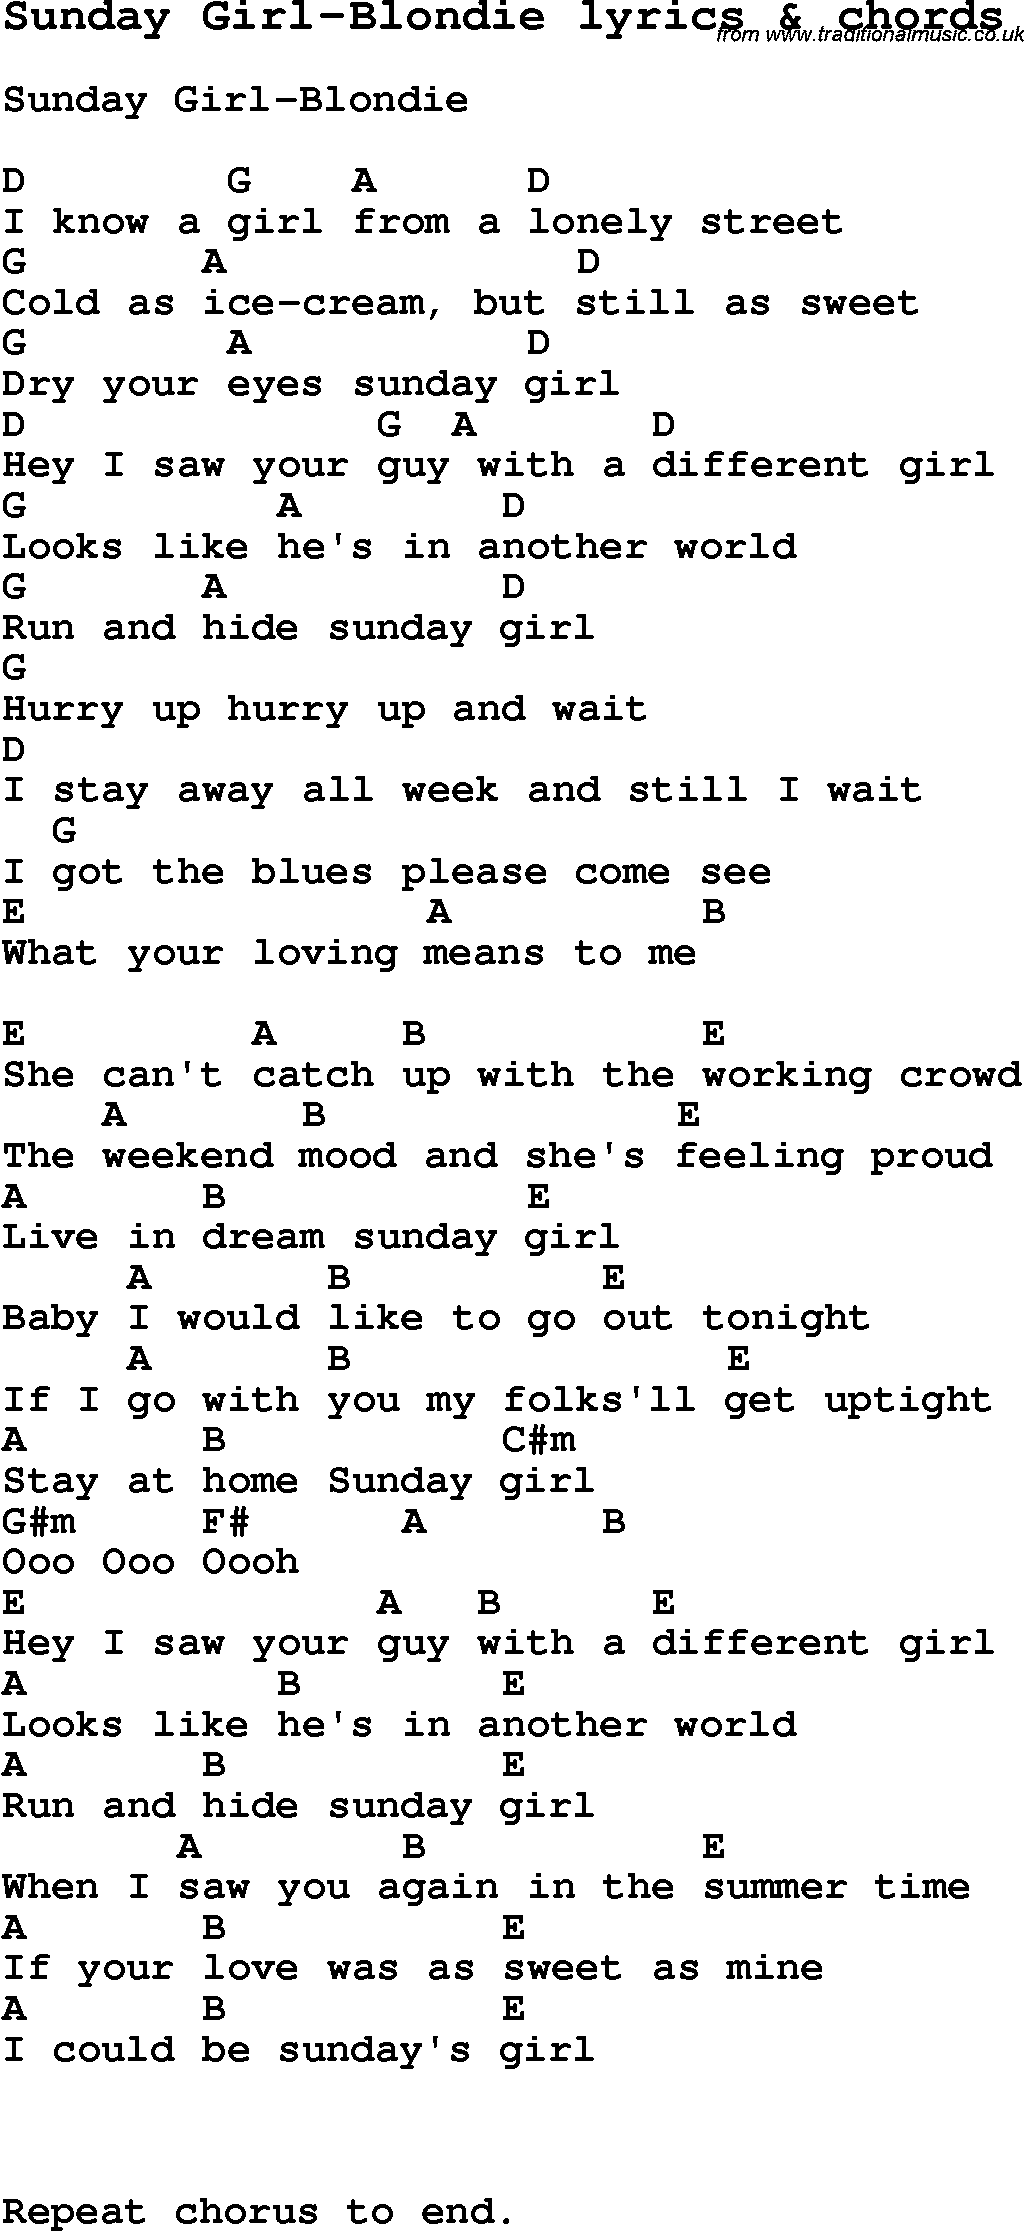 Love Song Lyrics for: Sunday Girl-Blondie with chords for Ukulele, Guitar Banjo etc.